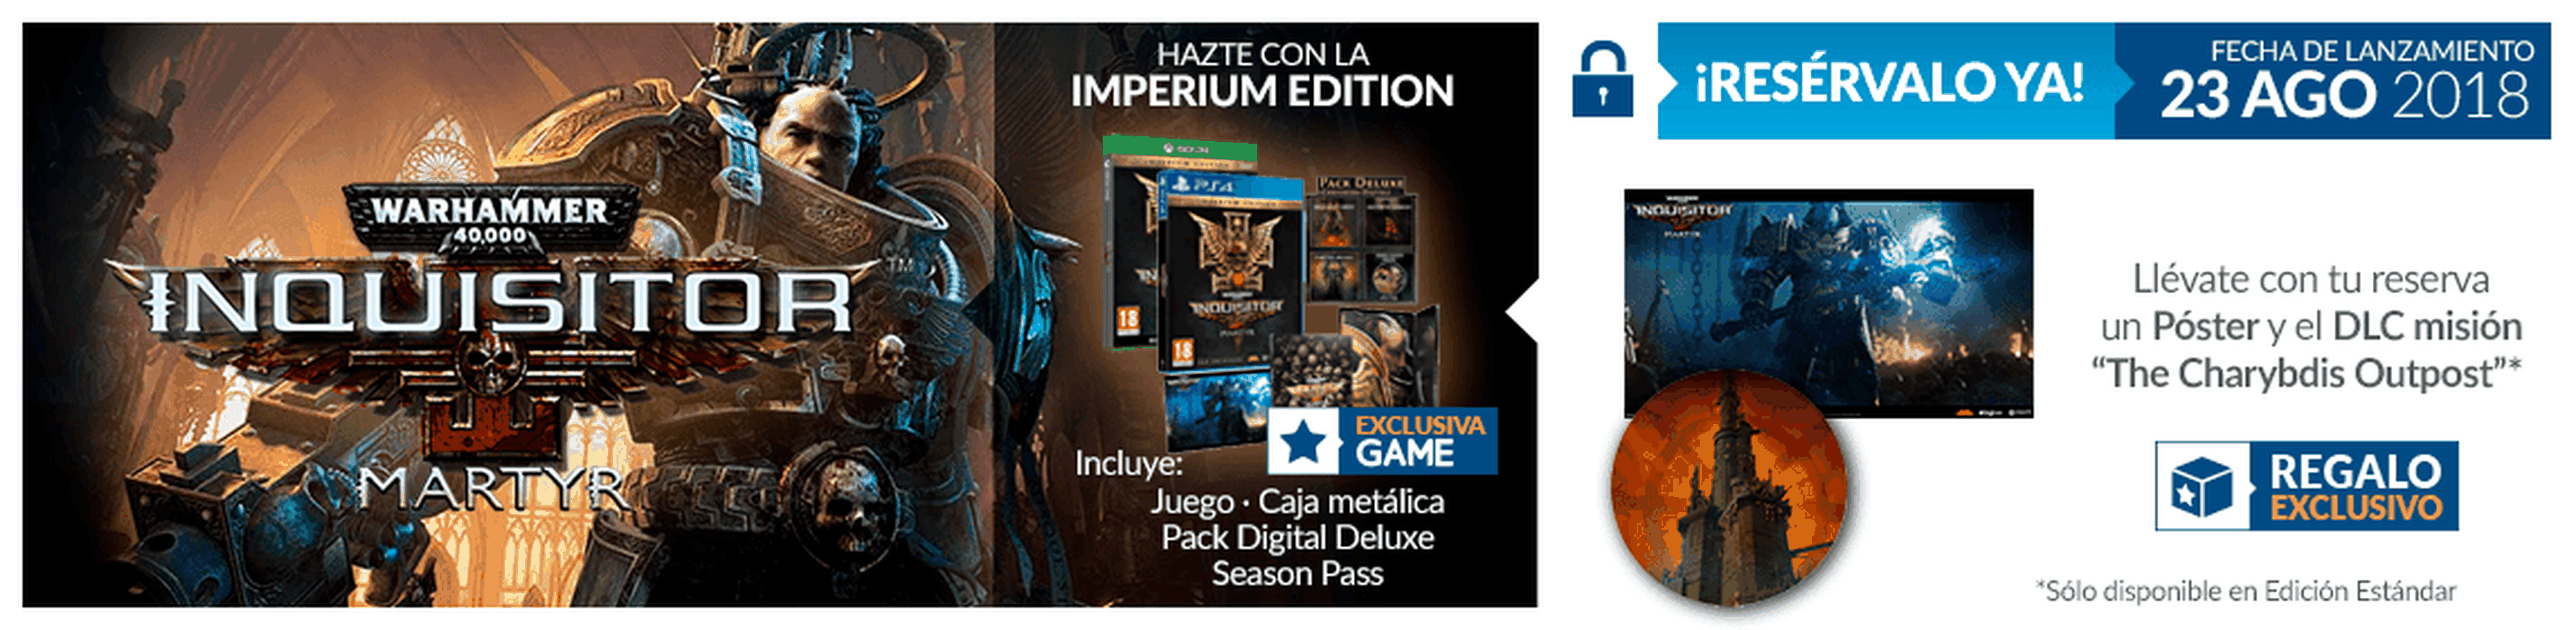 Warhammer 40.000 Inquisitor Martyr Imperium Edition en GAME